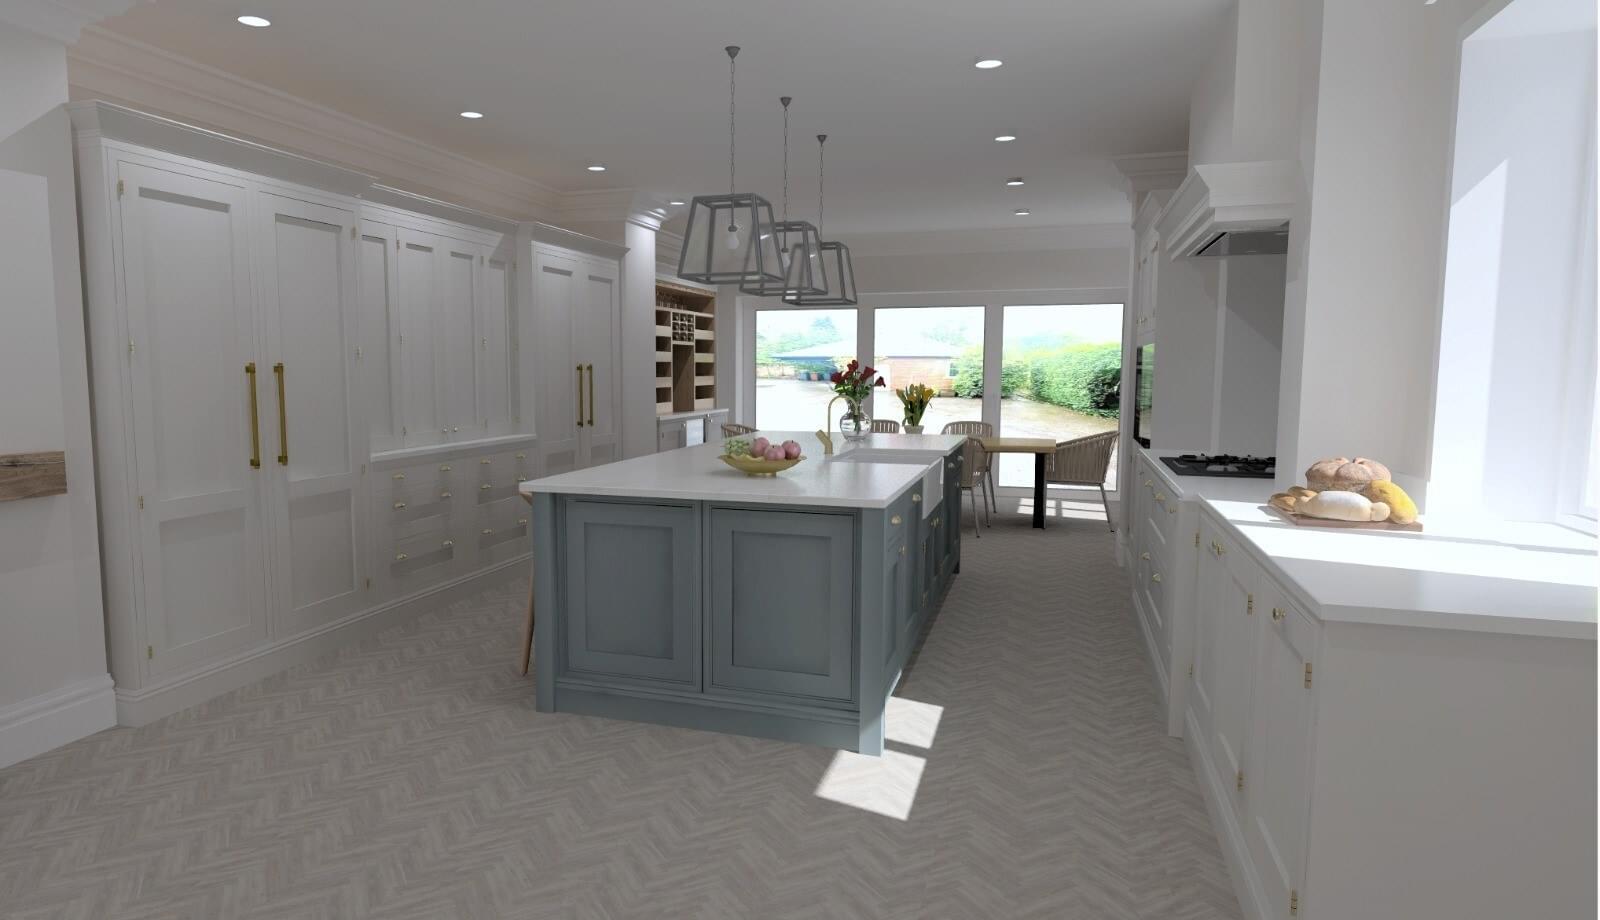 A cgi render of the kitchen design